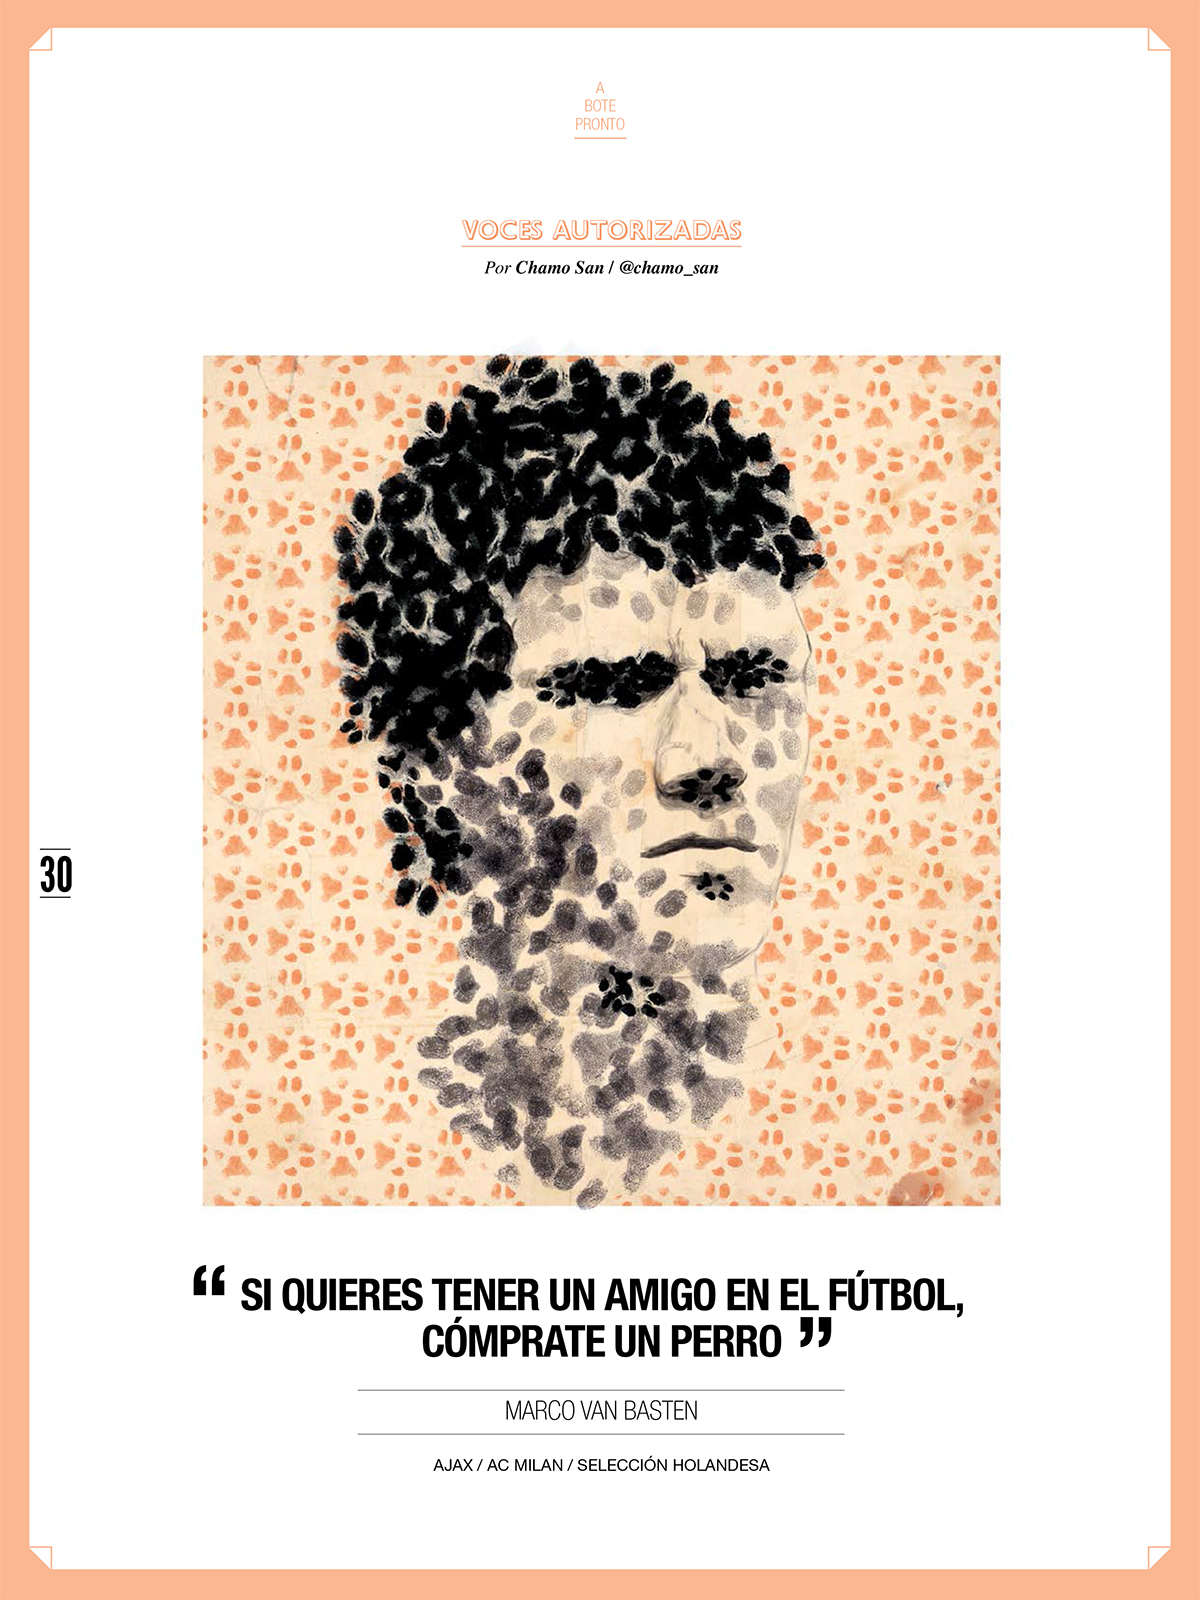 panenka football portrait portraits Futbol collina Menotti lavezzi maradona Cruyff